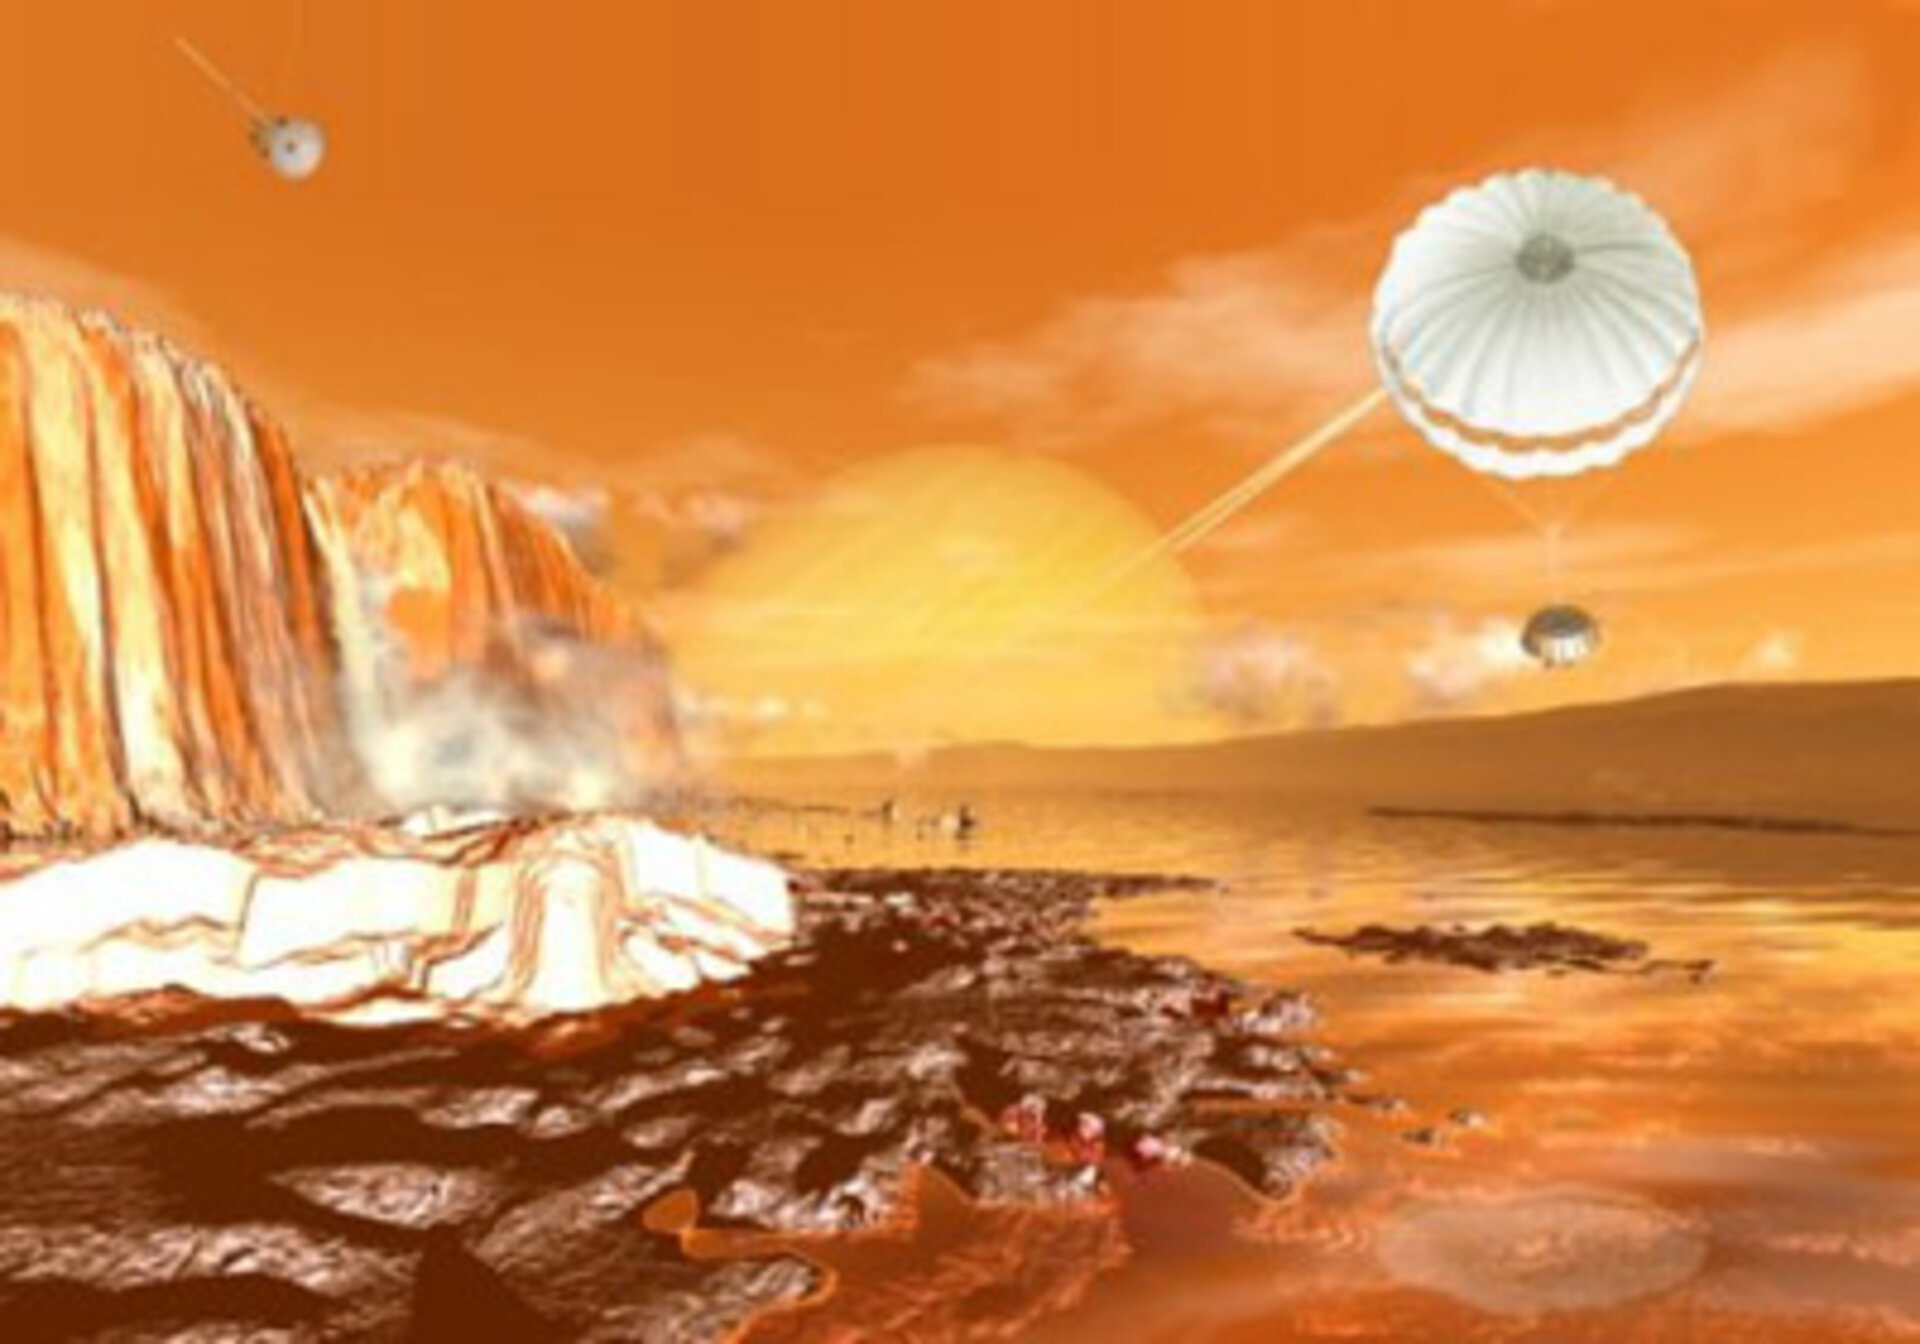 Will Huygens land or splashdown on Titan?